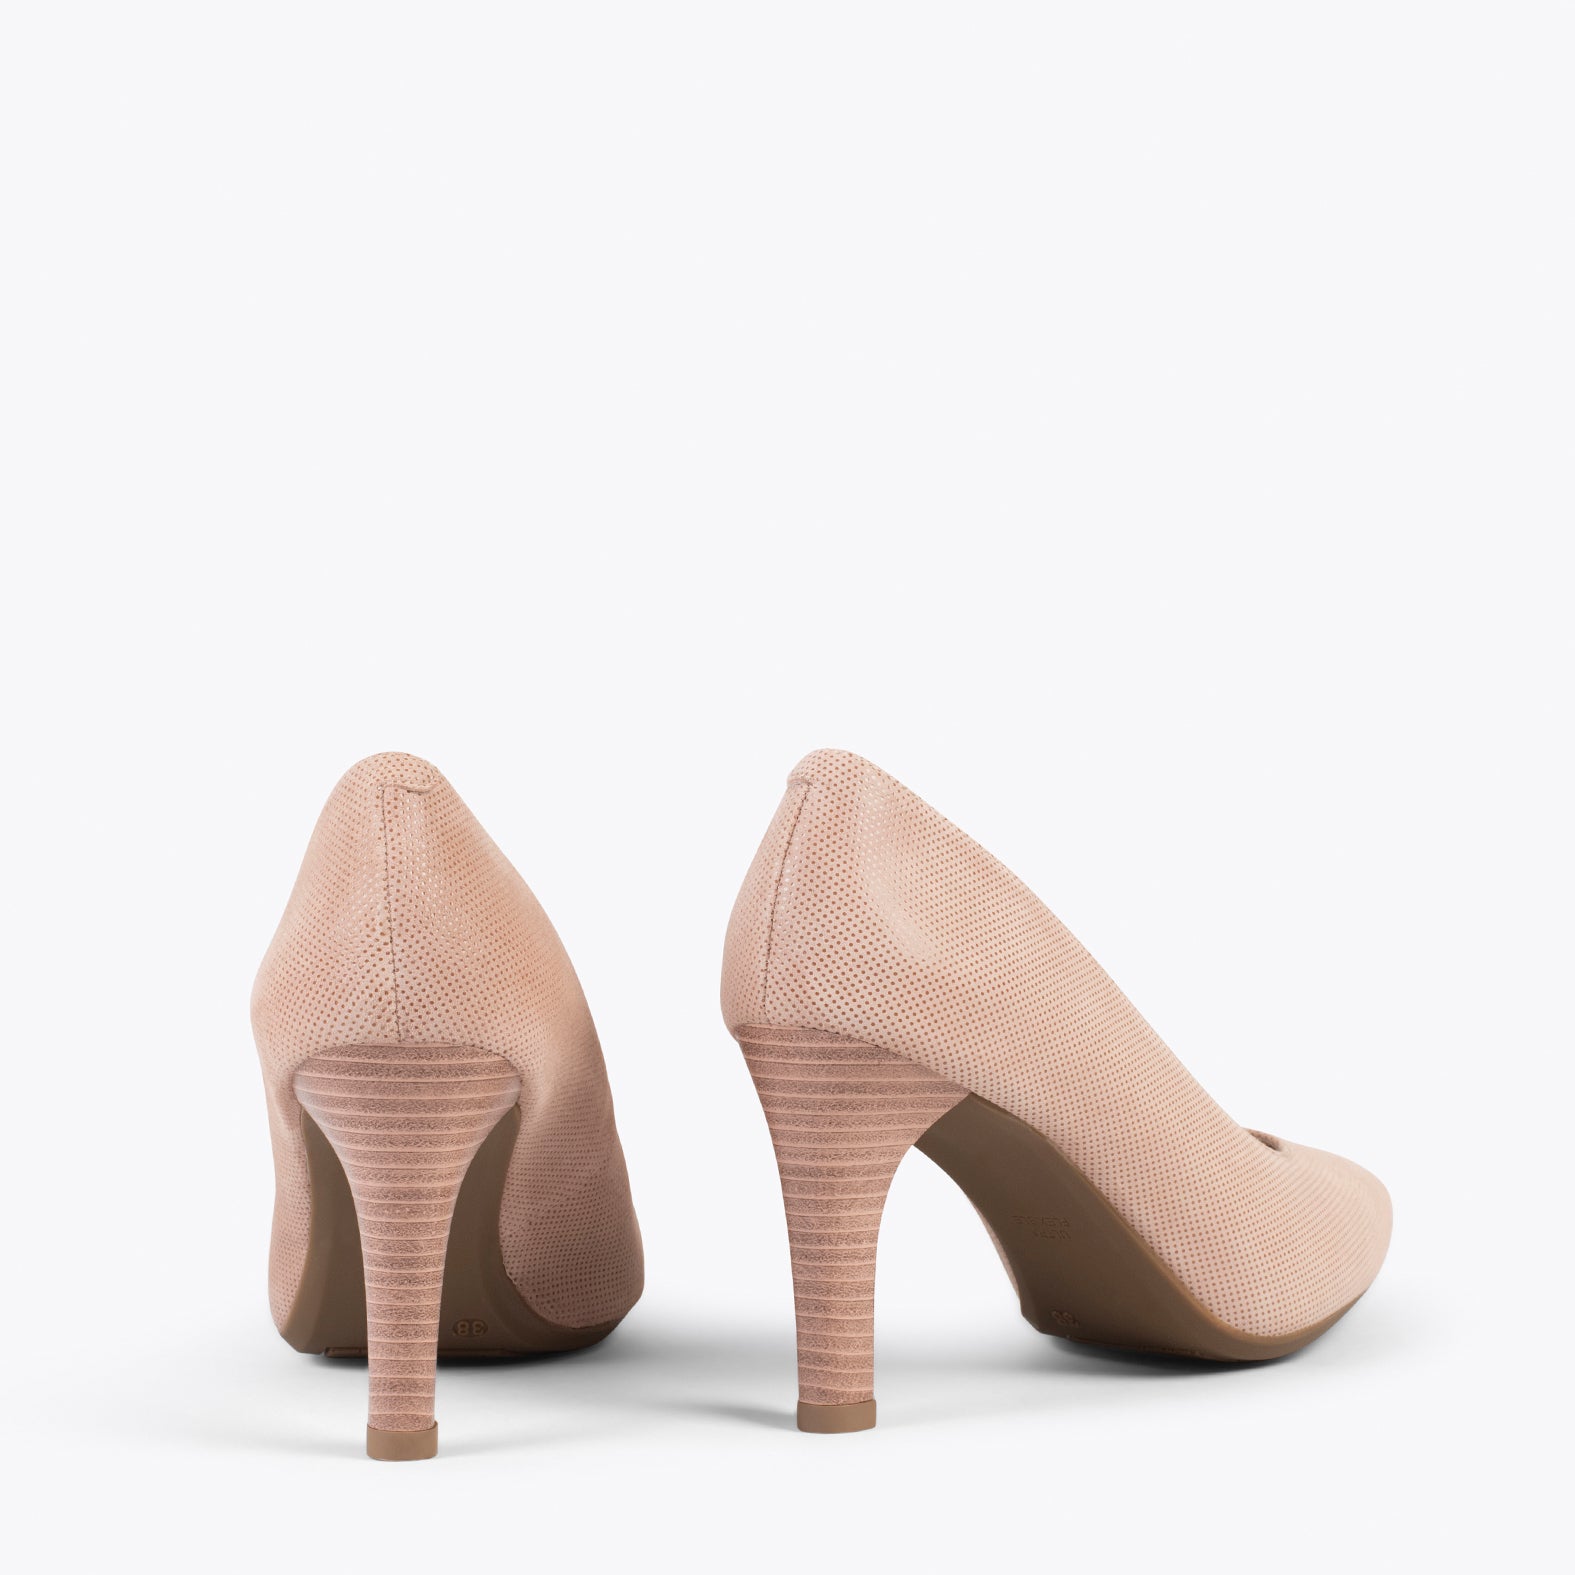 GLAM FANTASY – NUDE elegant high heels